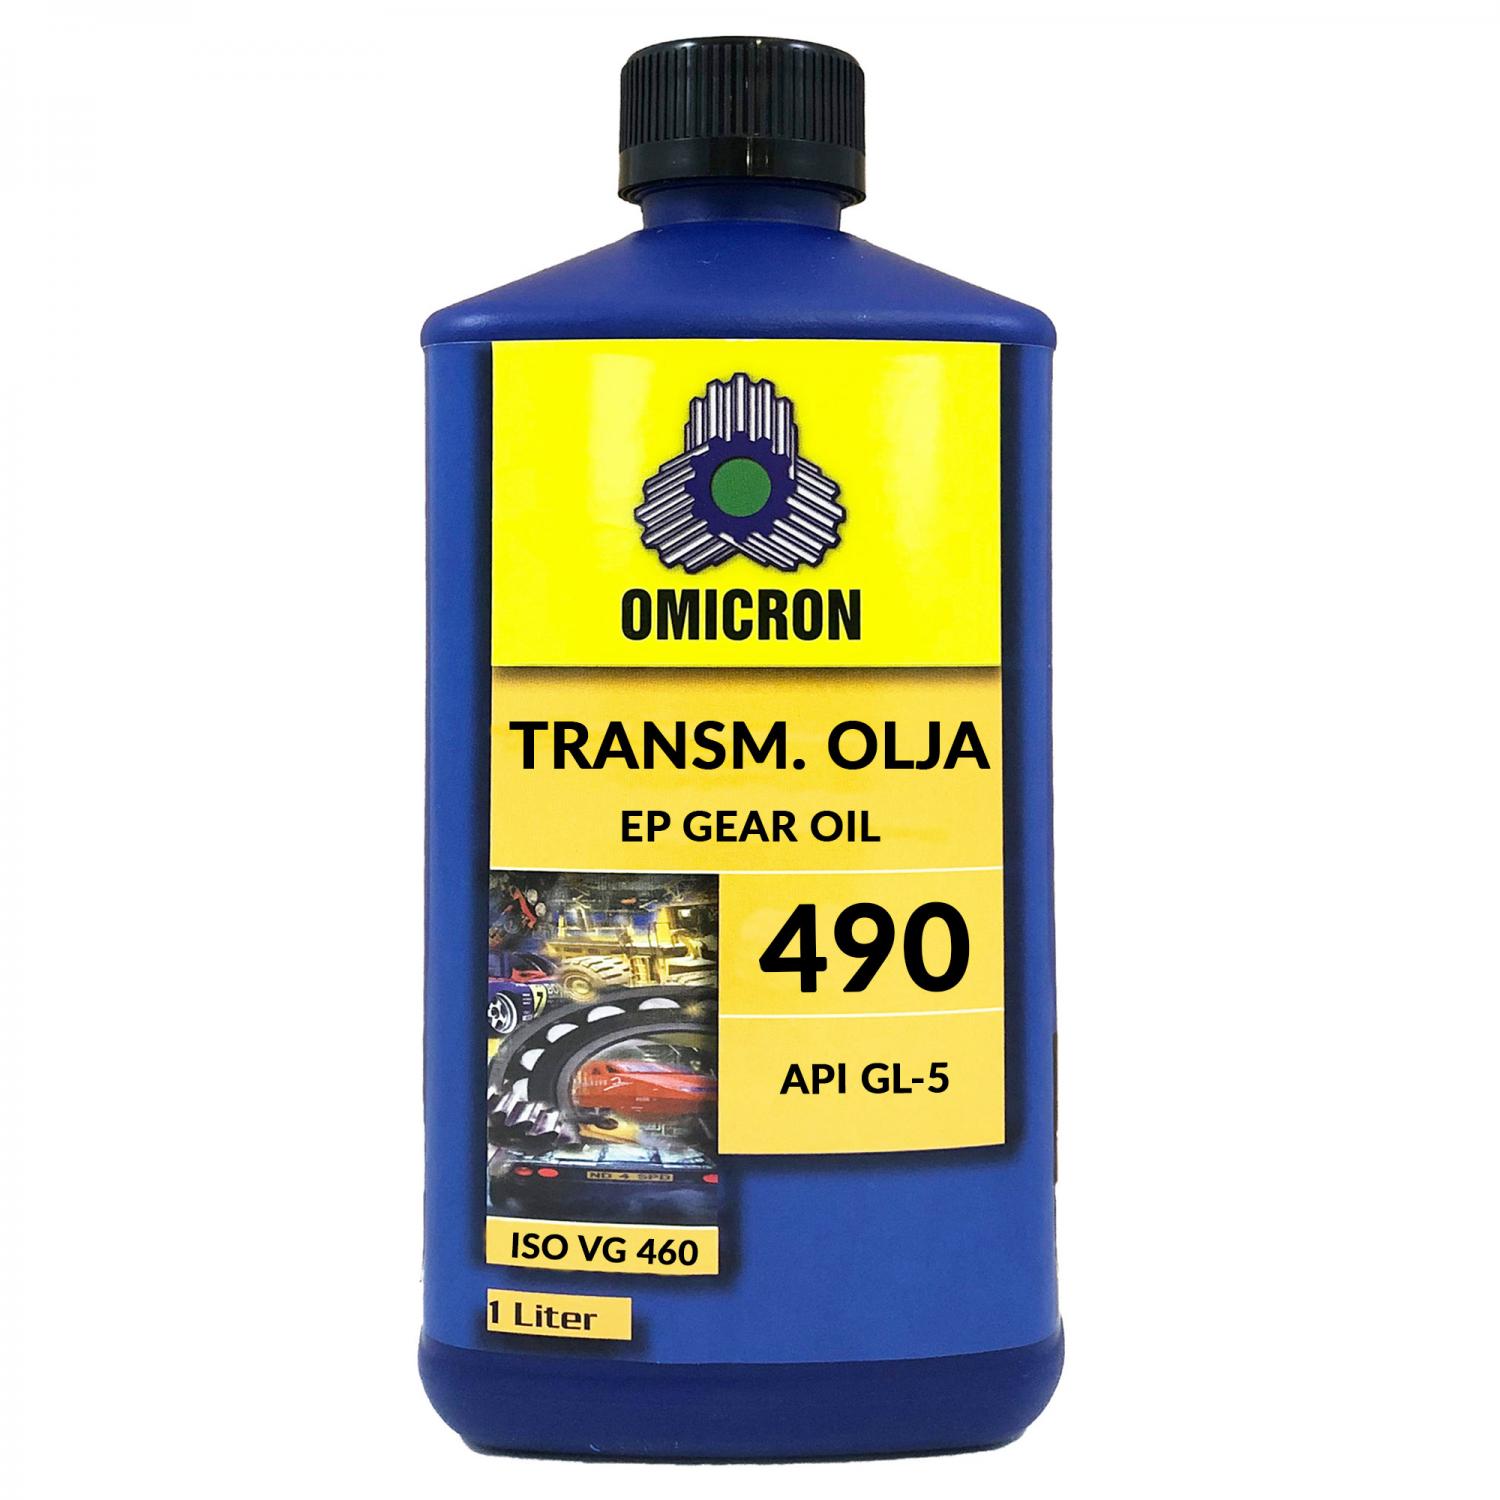 Omicron 490 ISO VG 460 Transmissionsolja API GL...